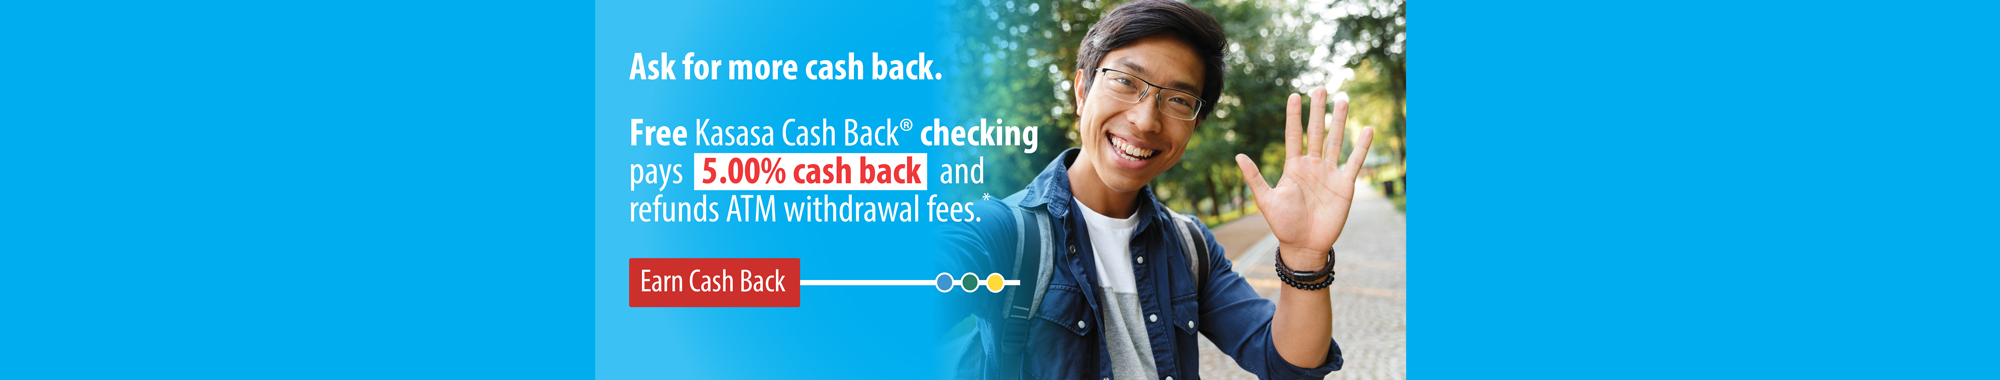 Ask for free Kasasa Cash Back checking!